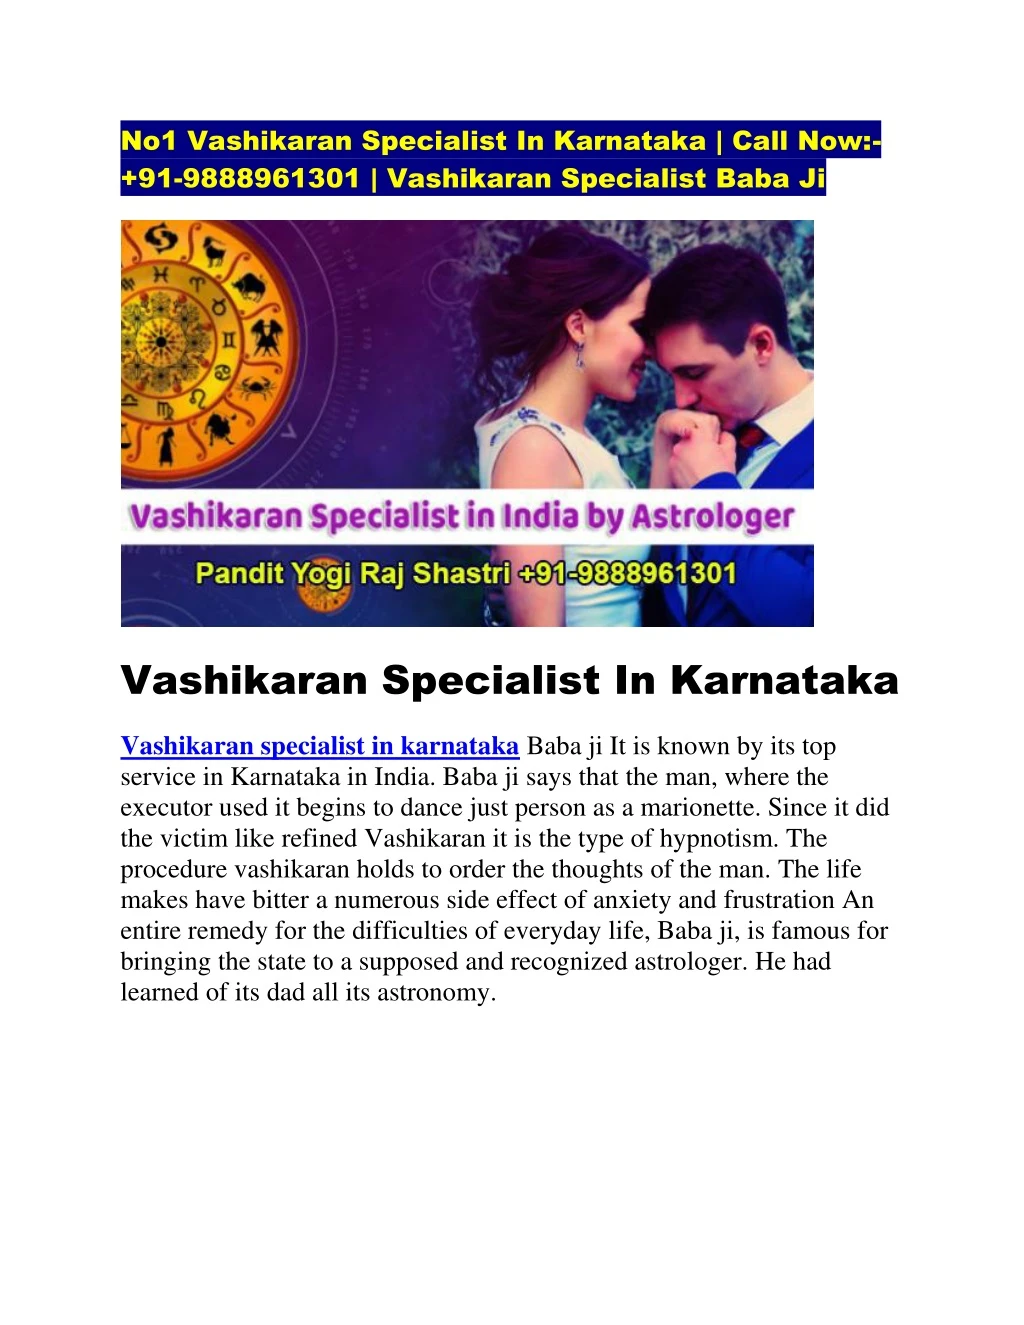 no1 vashikaran specialist in karnataka call